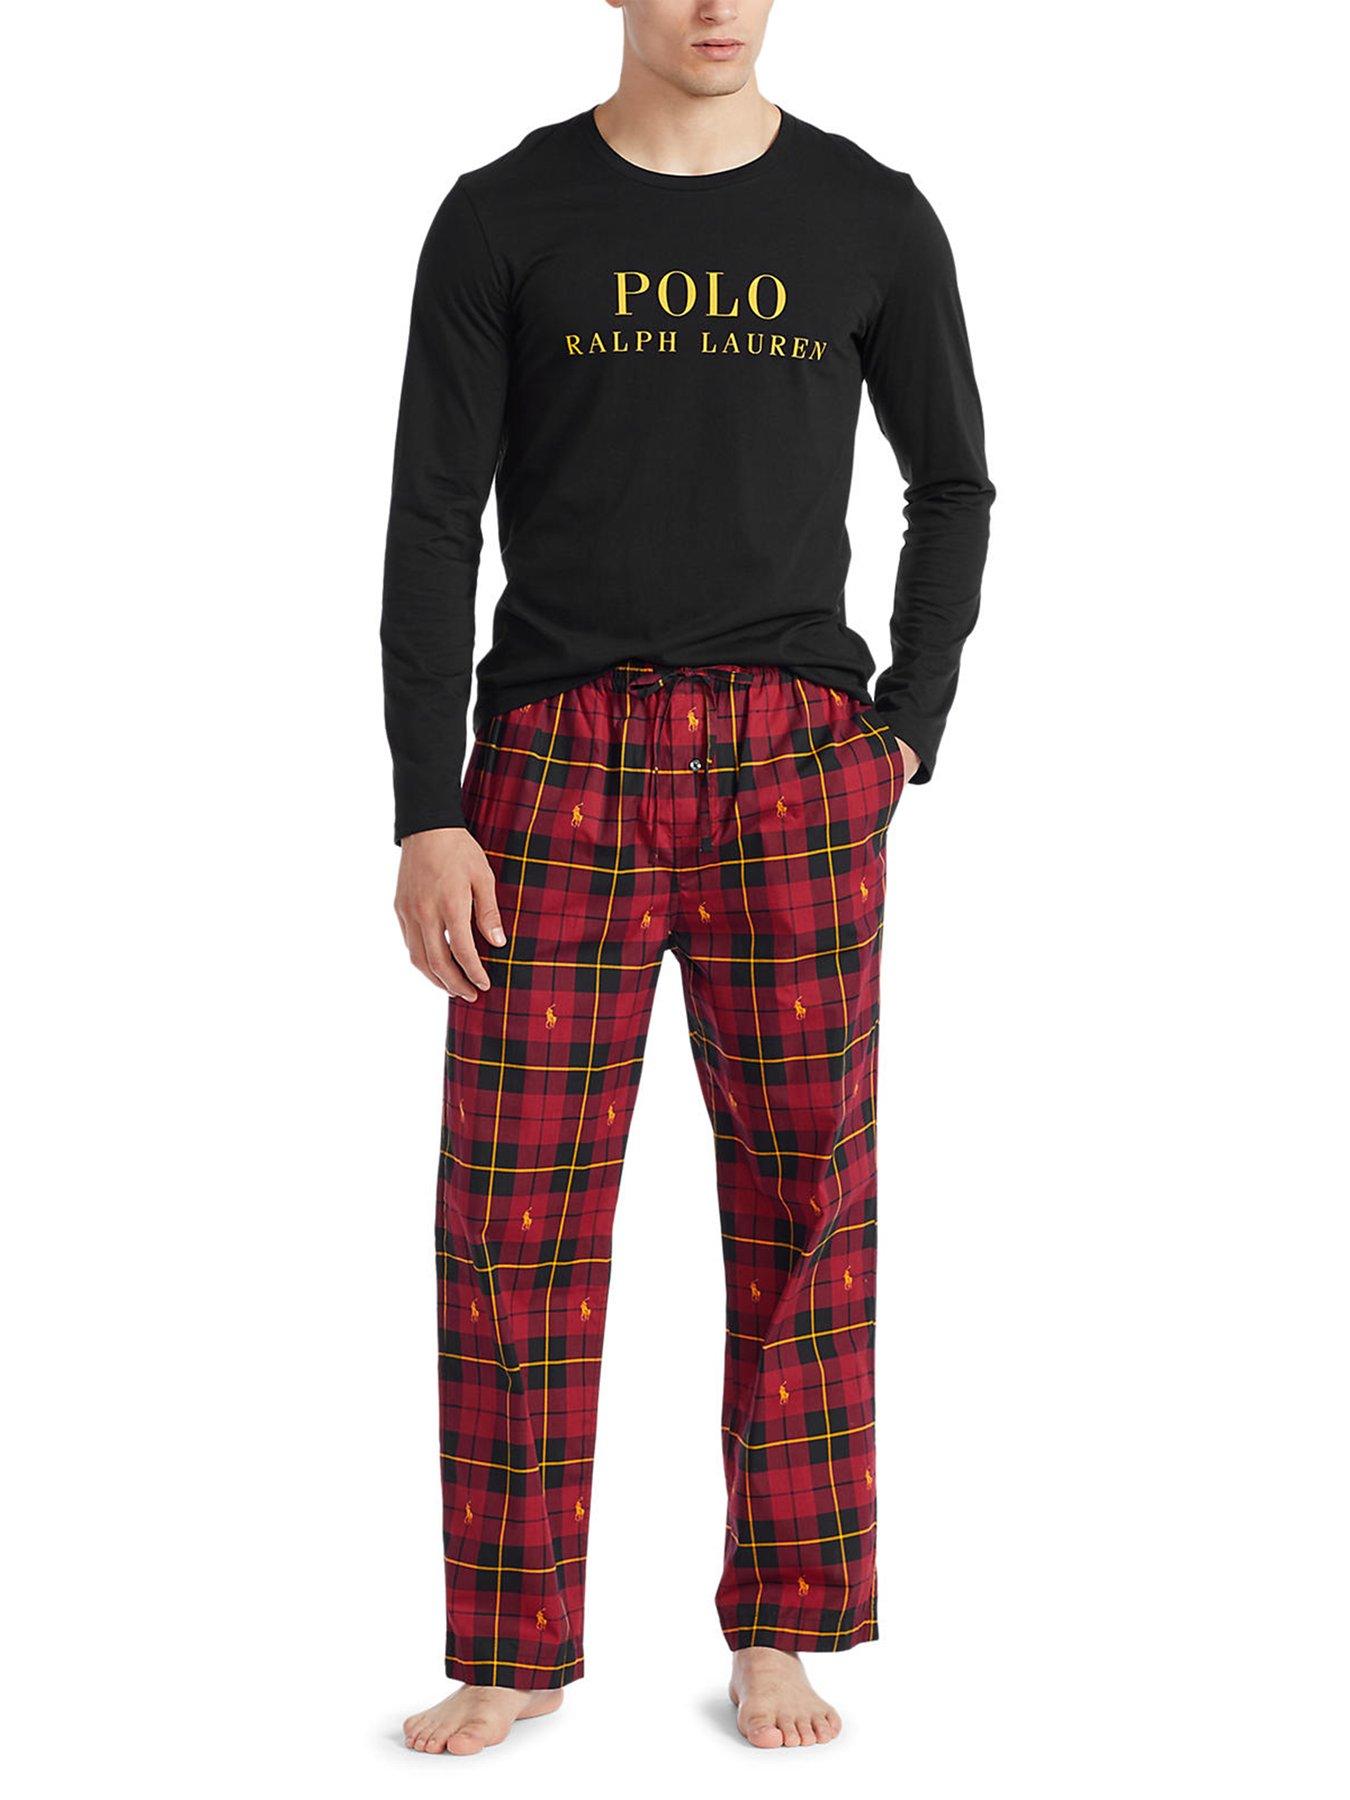 Polo Ralph Lauren Christmas Lounge Gift Set - Black/Red 